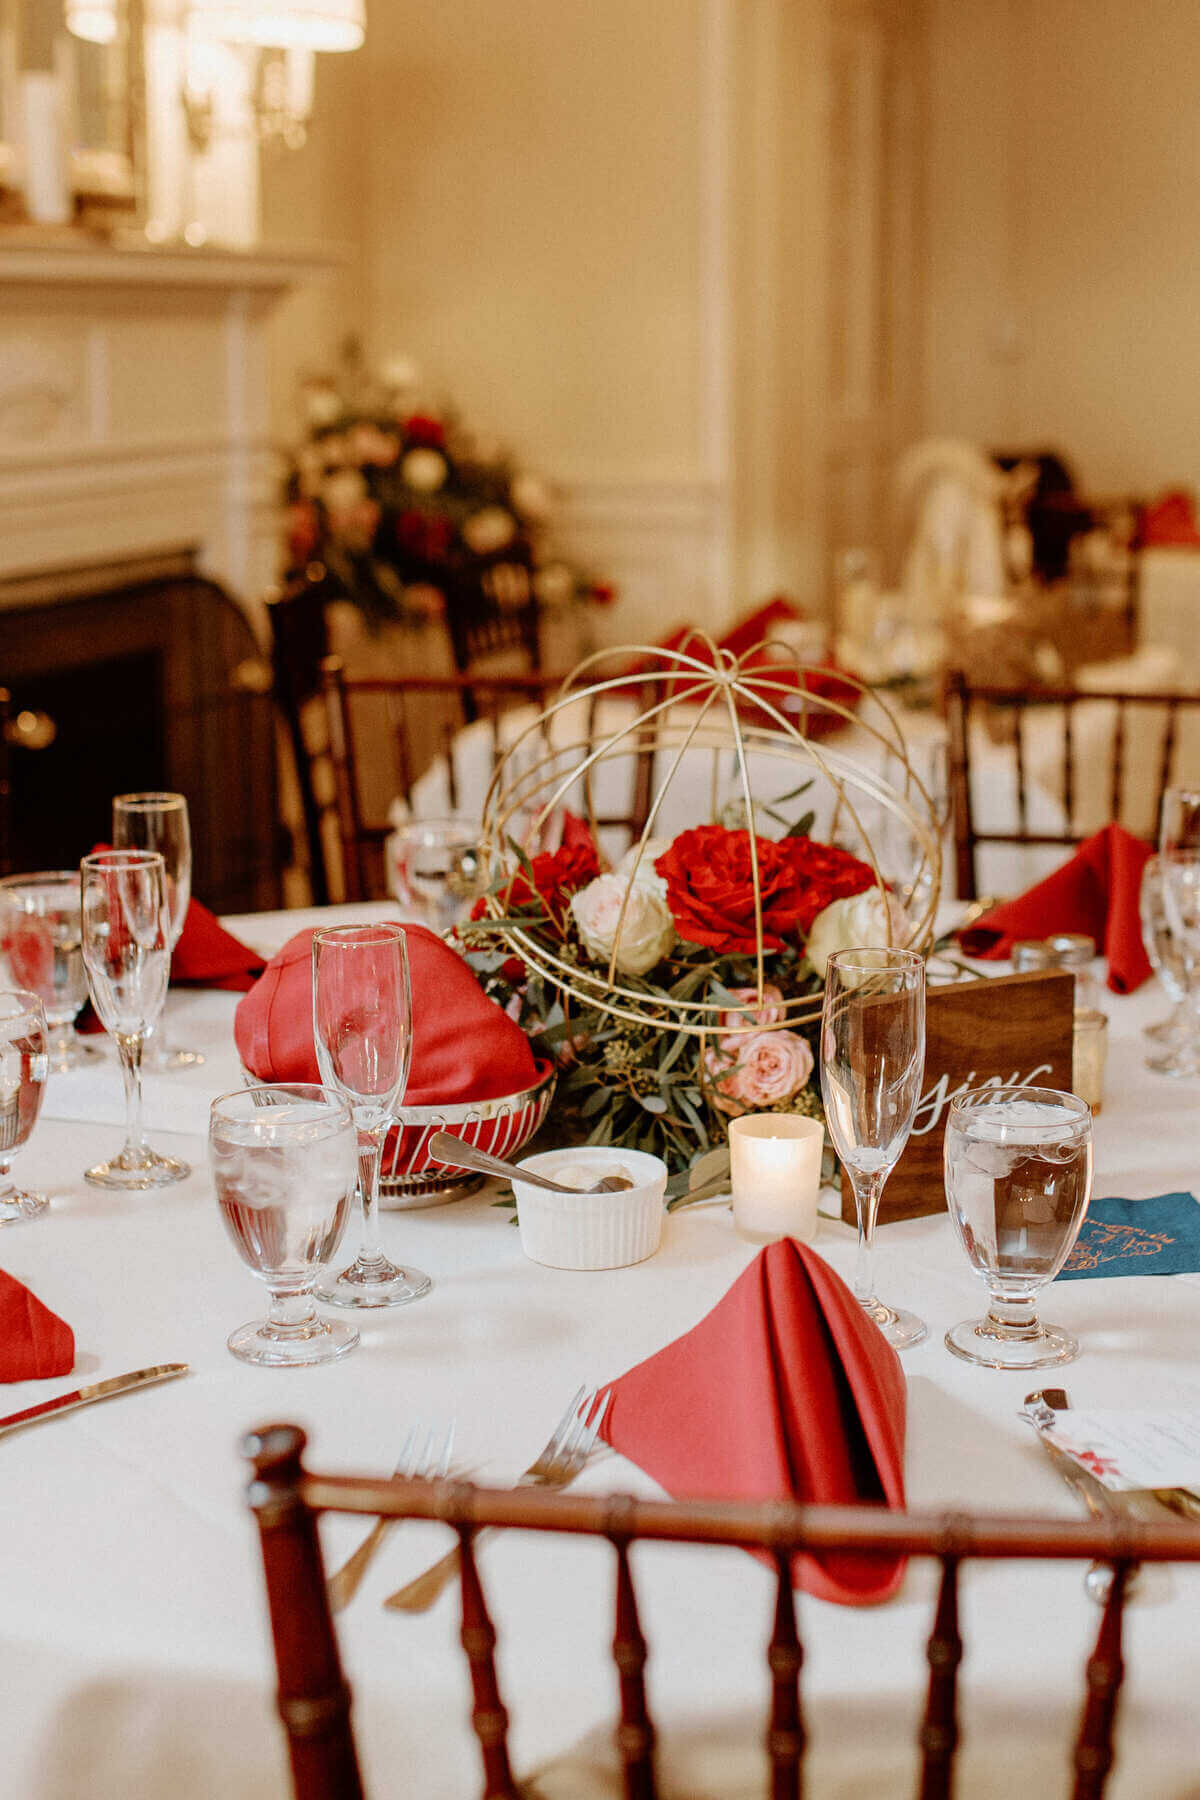 22-kara-loryn-photography-wedding-guest-table-setting